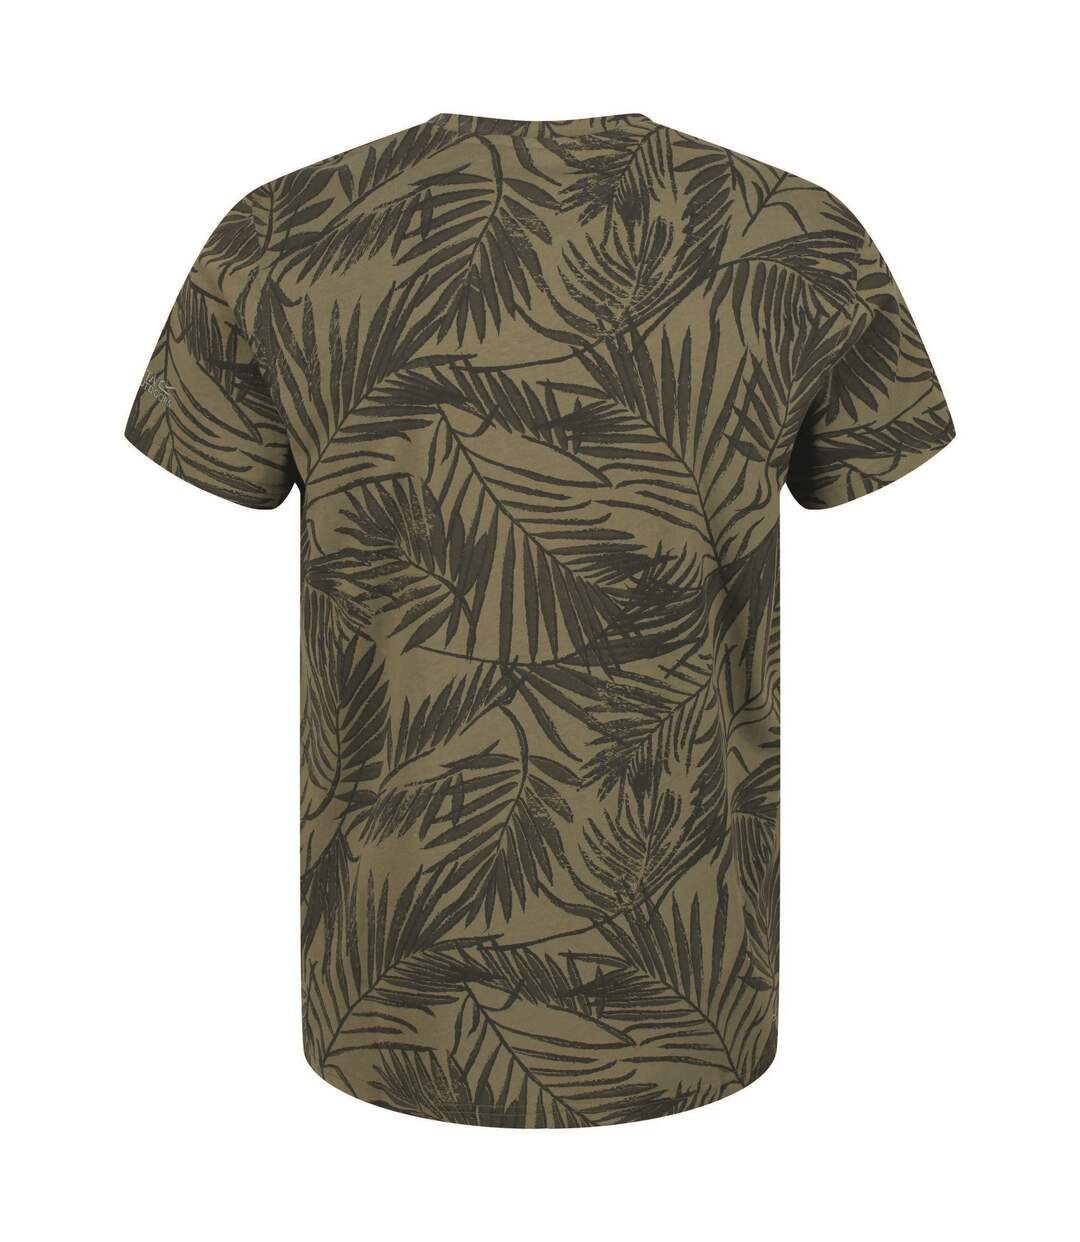 Regatta - T-shirt CLINE - Homme (Vert kaki) - UTRG6818